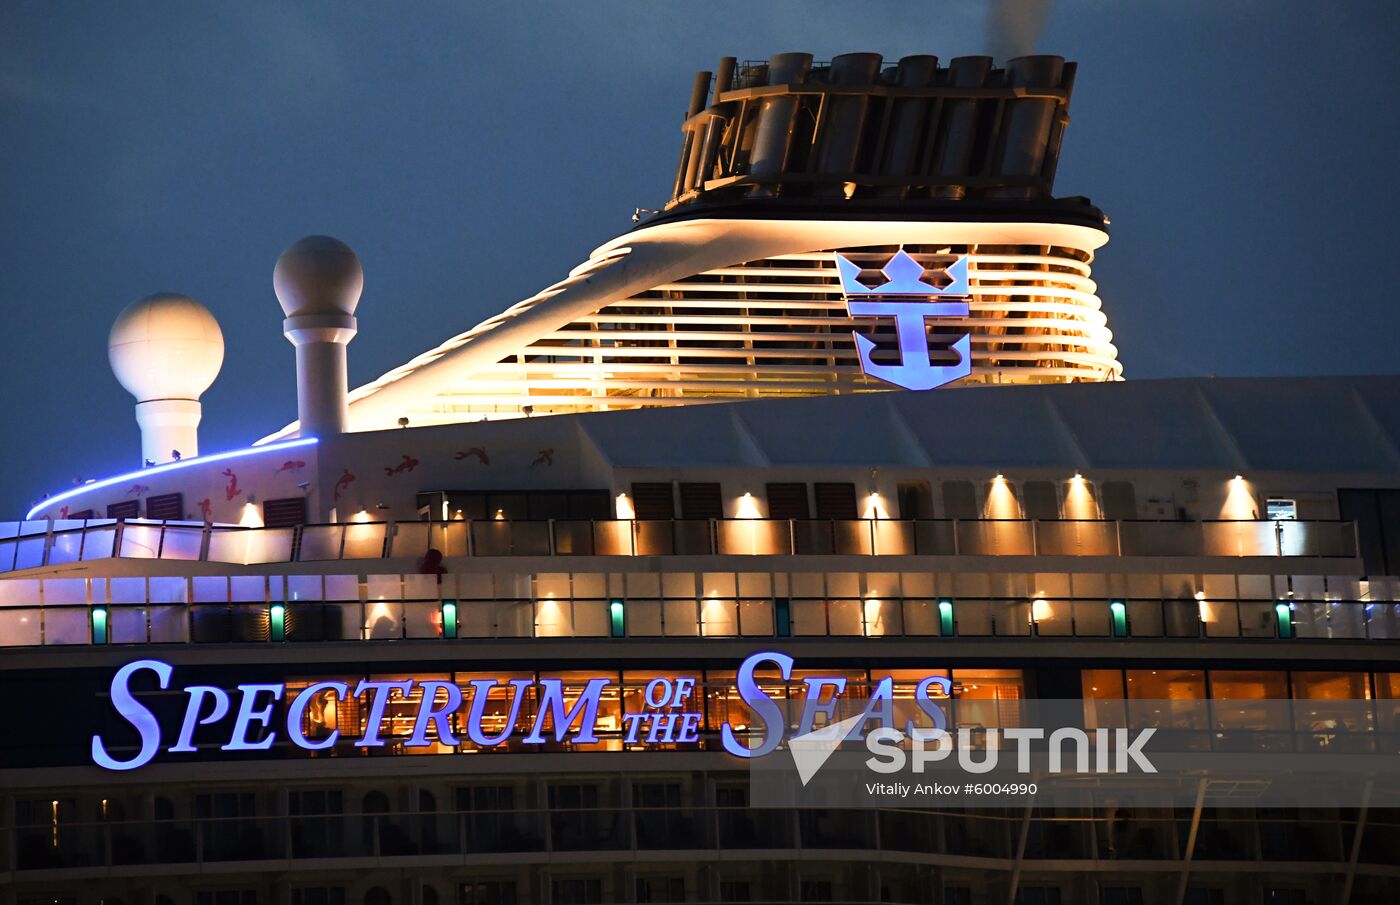 Russia Spectrum of the Seas Cruise Ship